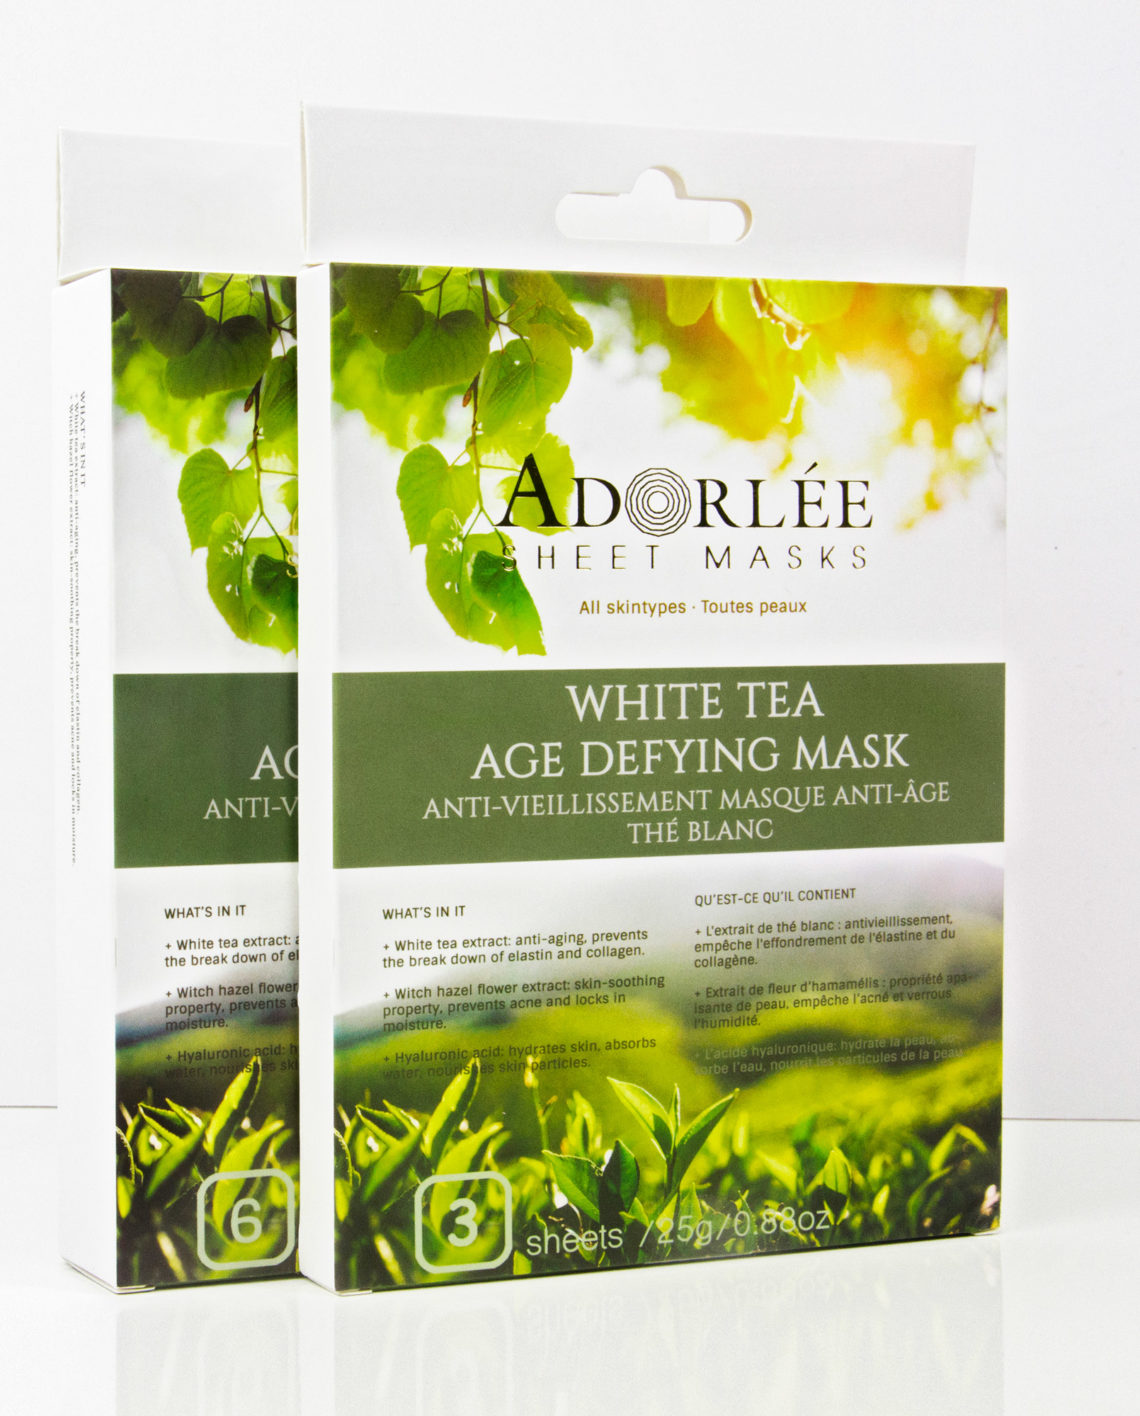 ADORLÉE White Tea Age Defying Mask 1